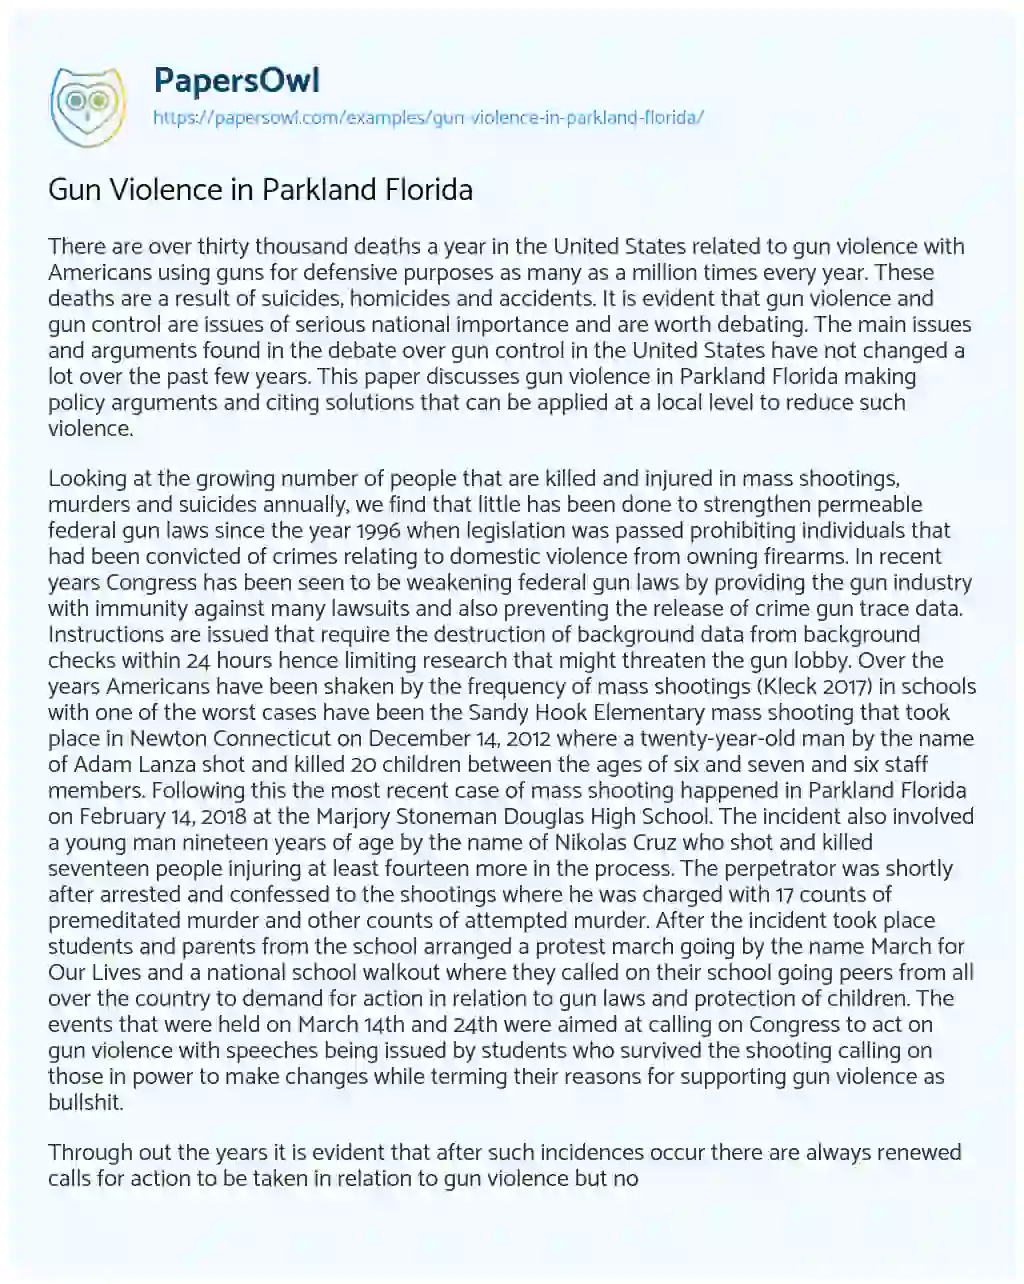 Essay on Gun Violence in Parkland Florida